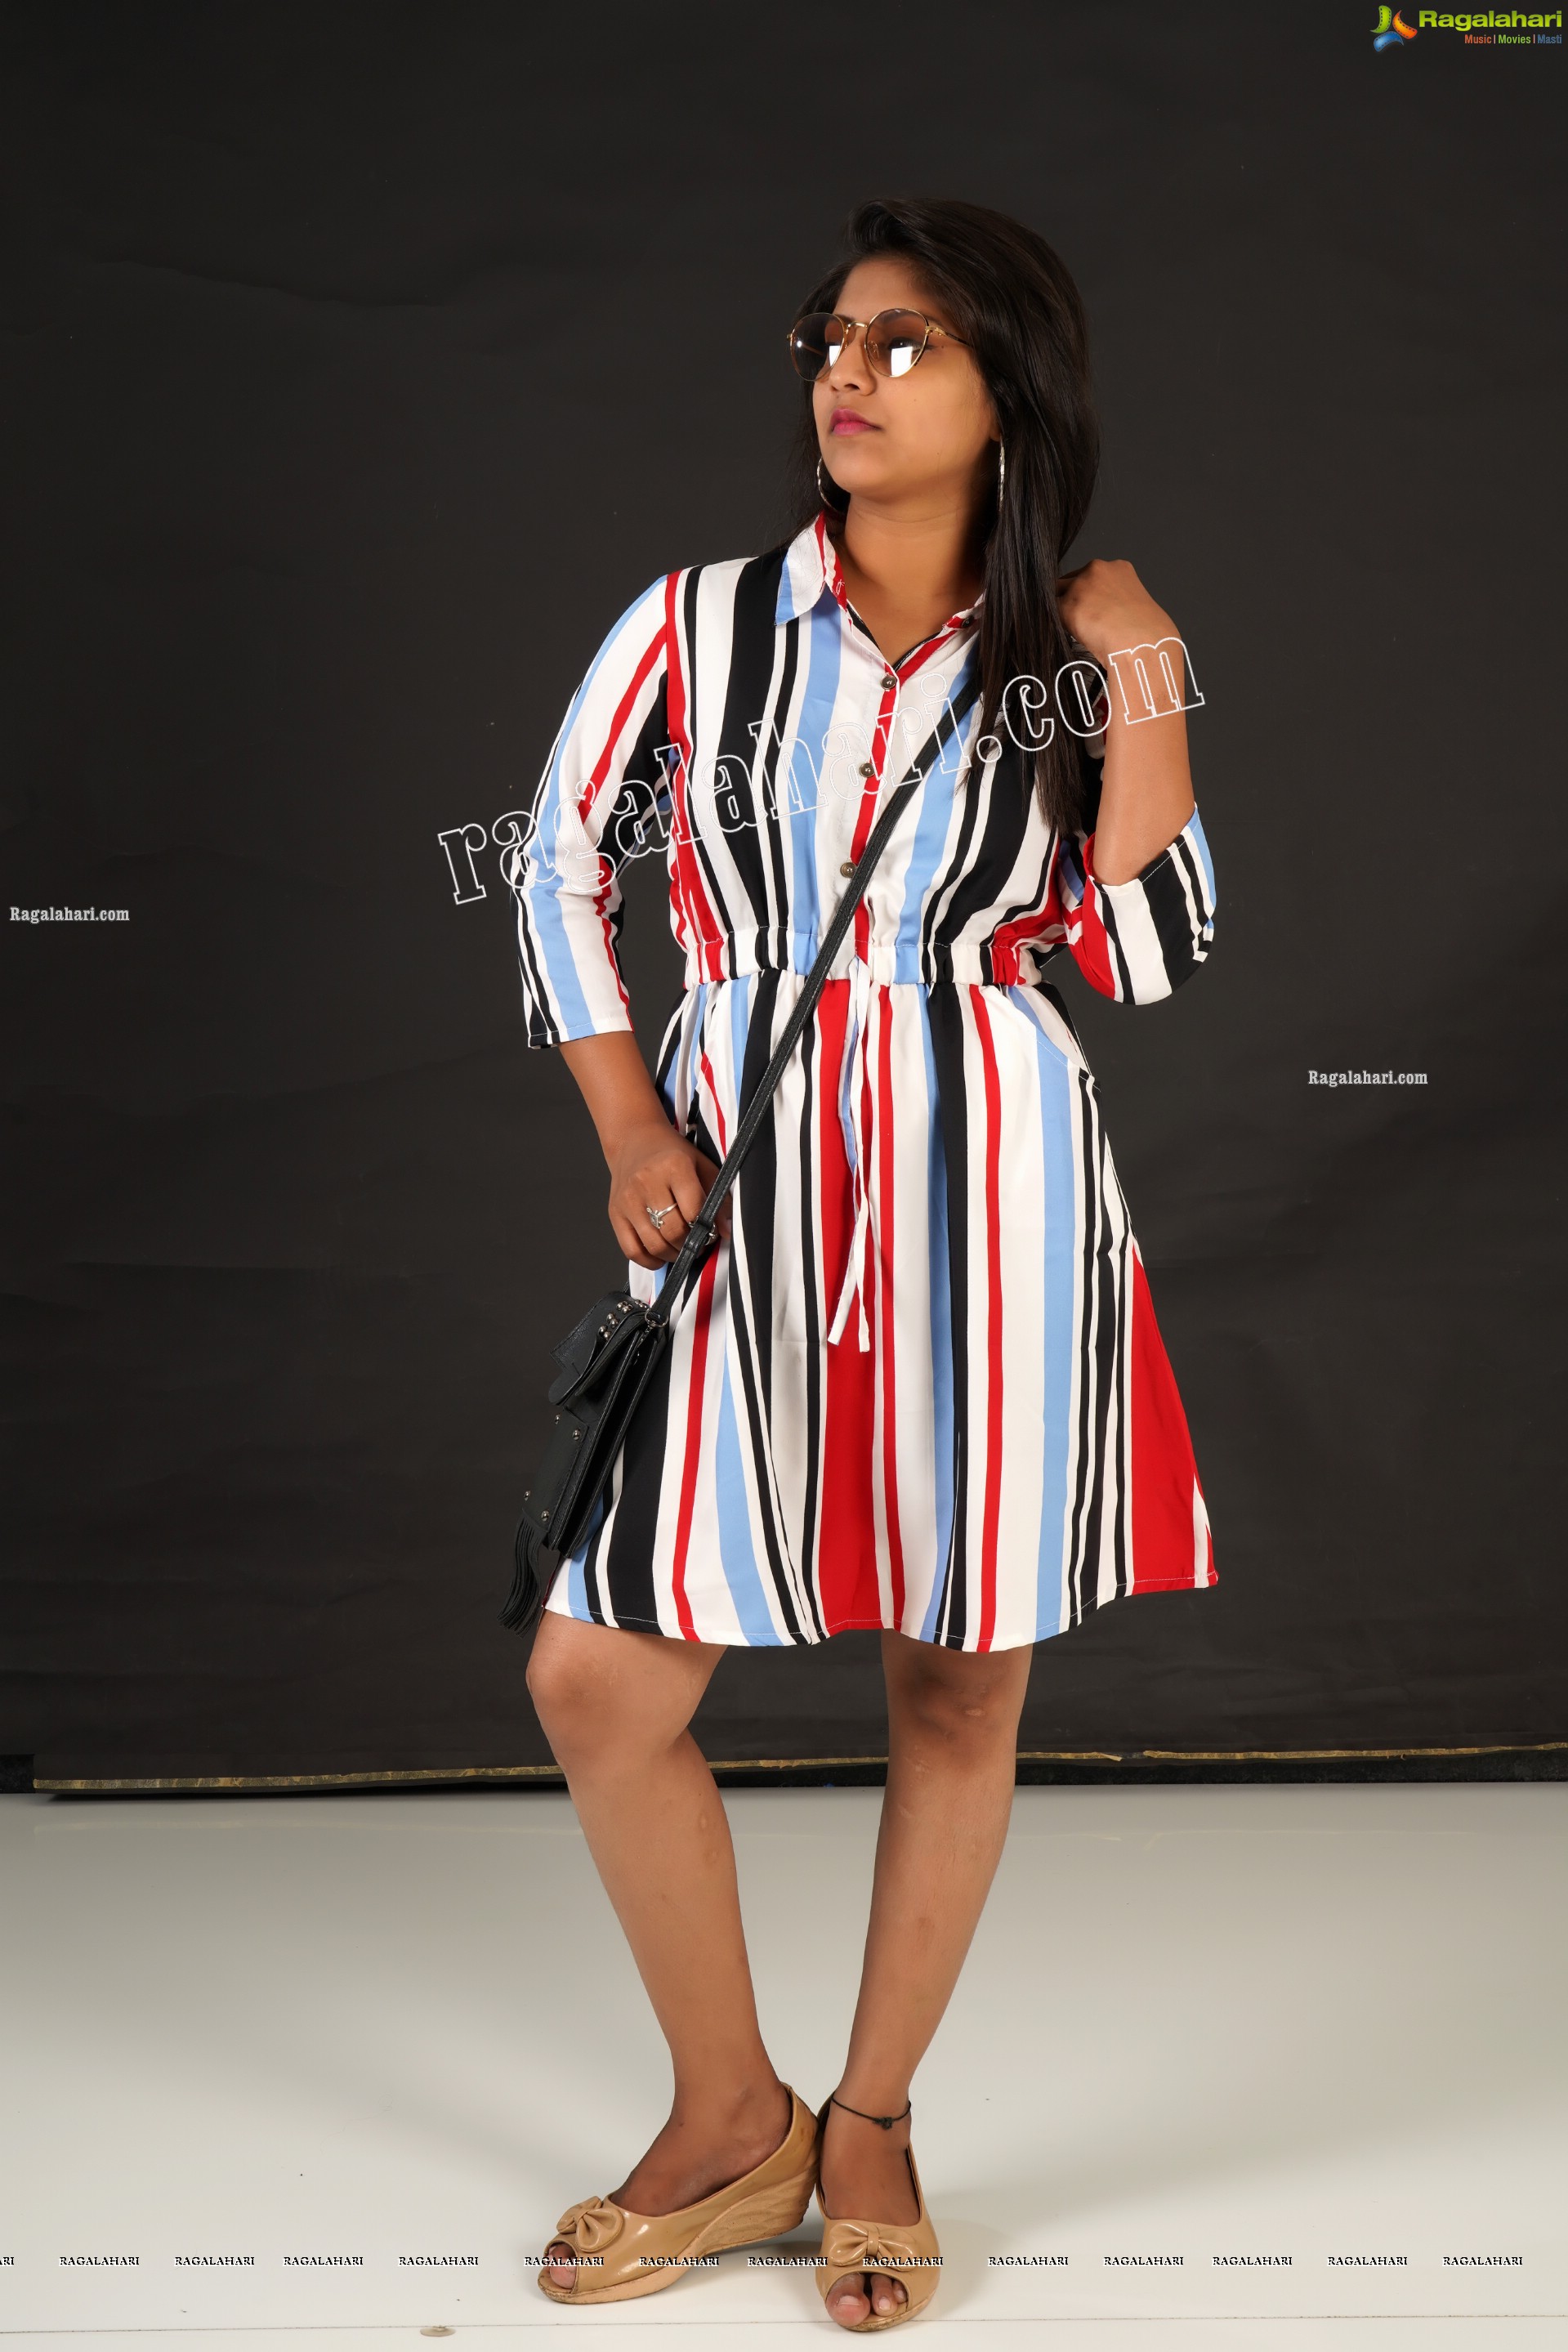 Shabeena Shaik in Striped Knee-Length Dress Exclusive Photo Shoot